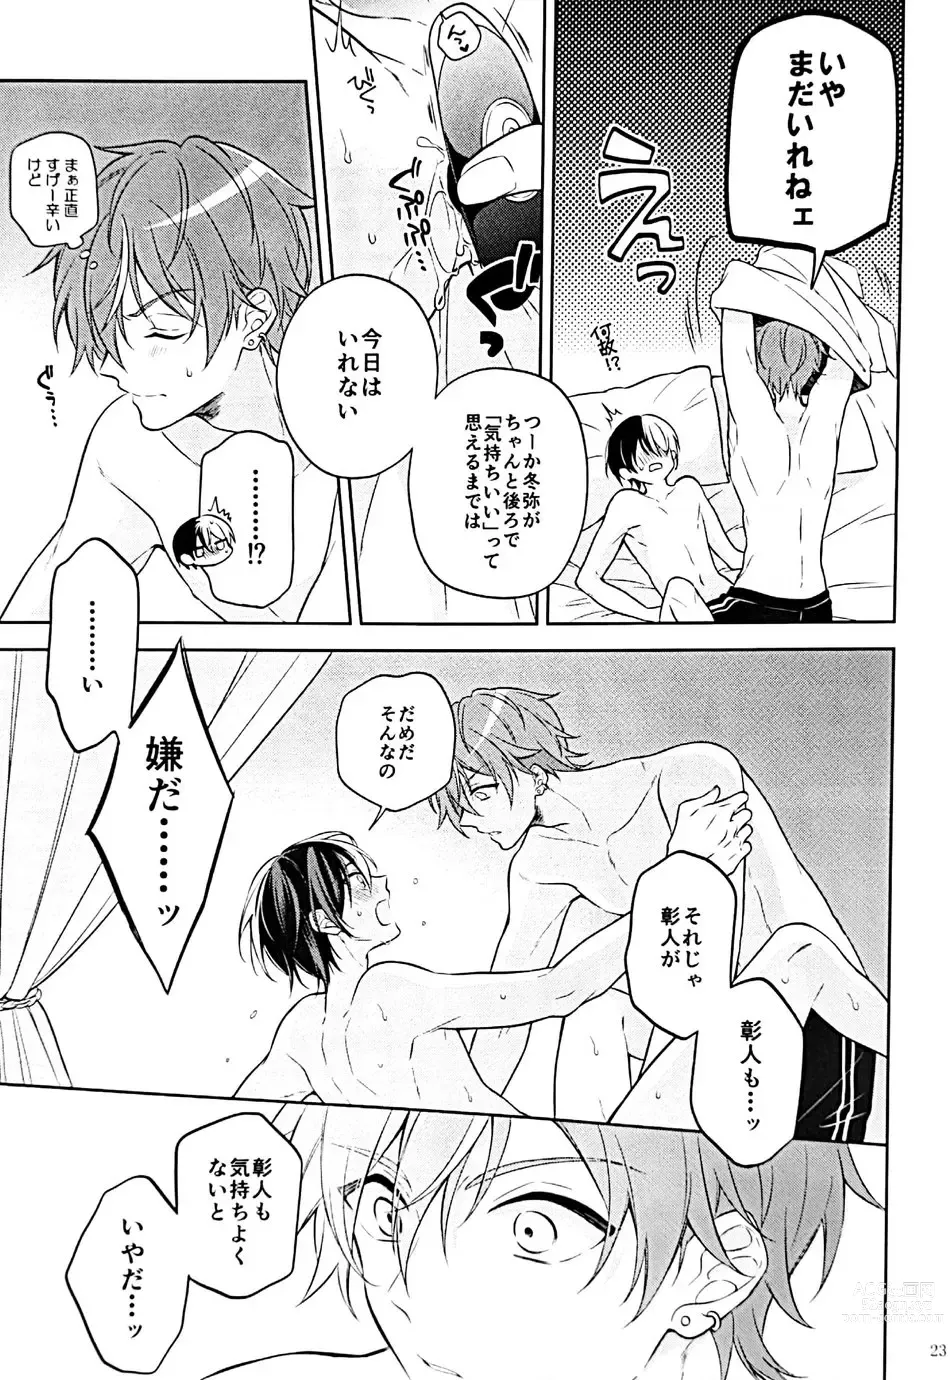 Page 24 of doujinshi RETRY